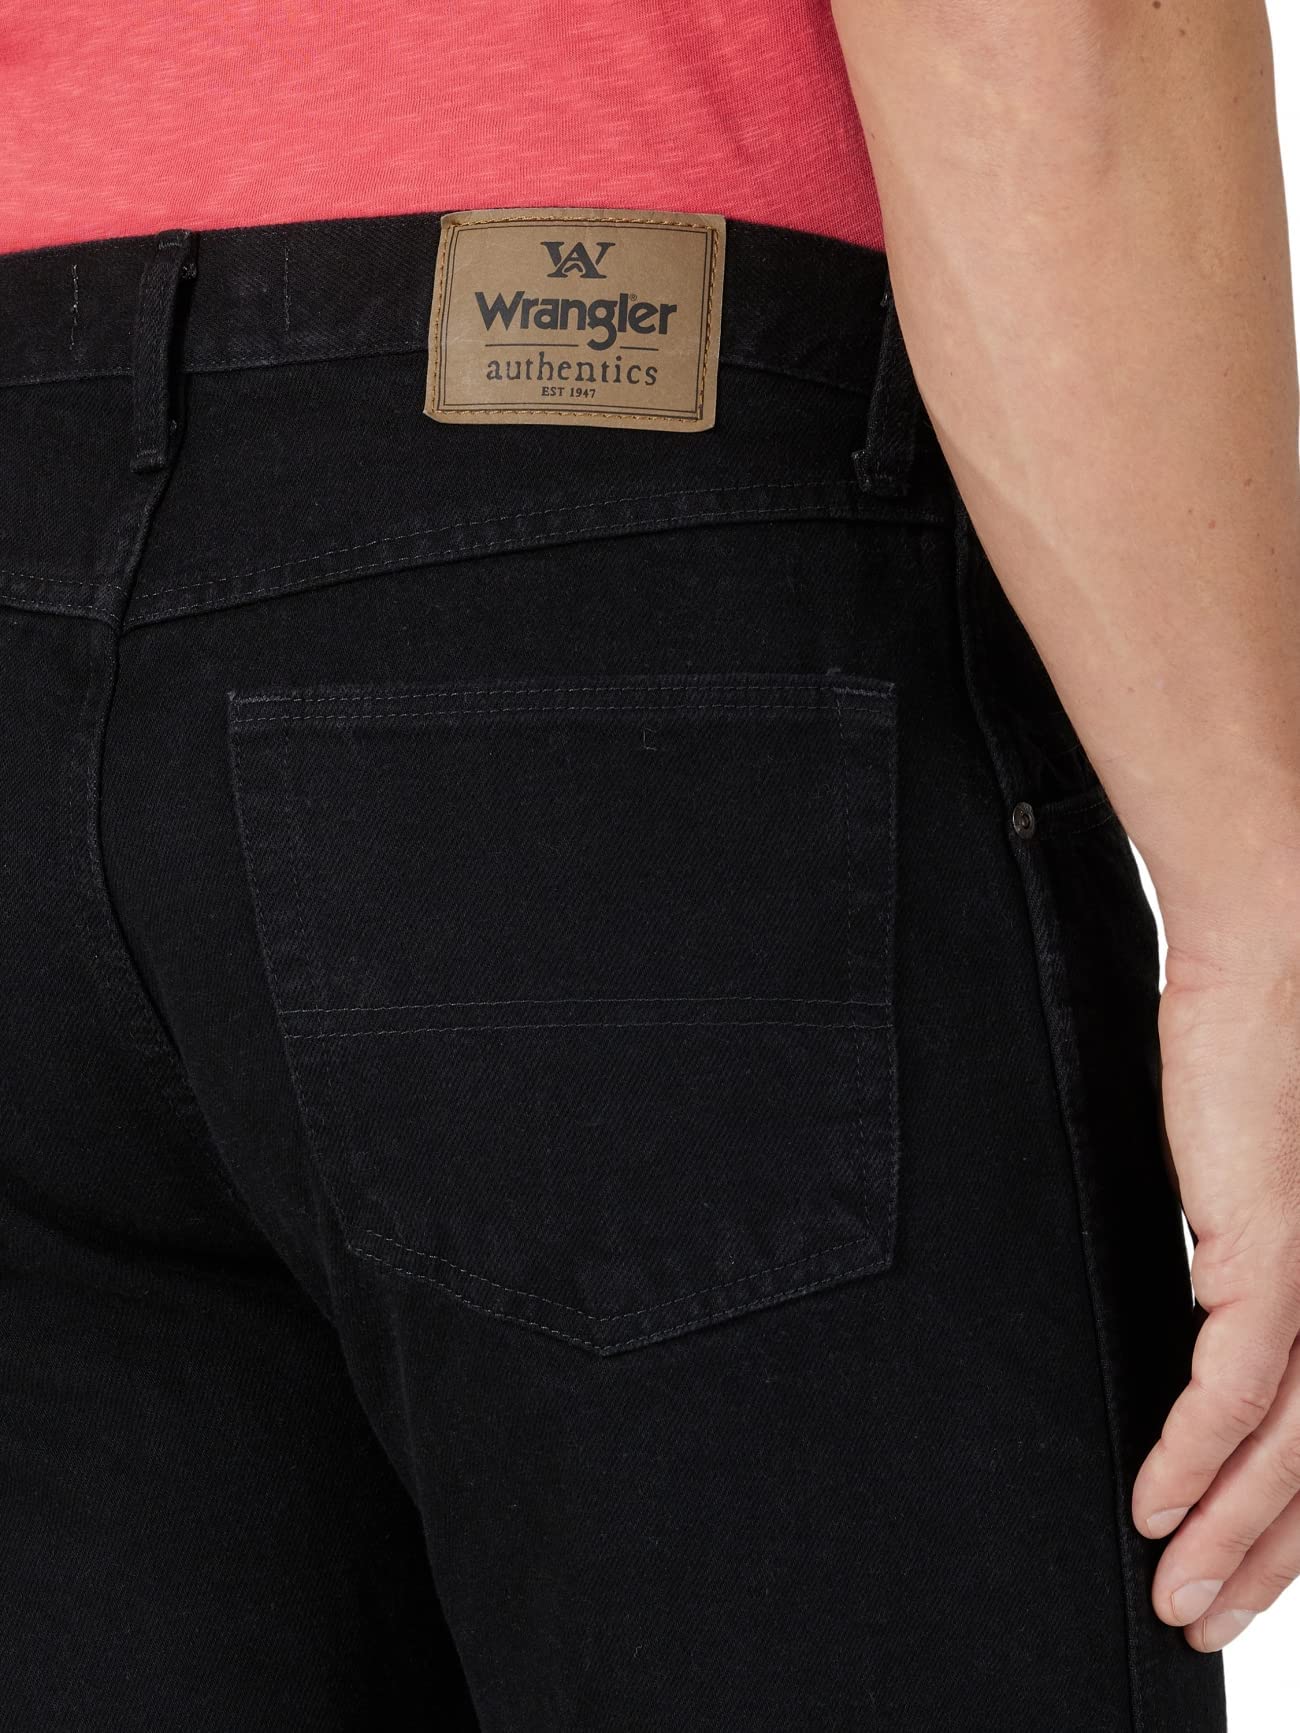 Wrangler Authentics Men's Classic 5-Pocket Regular Fit Cotton Jean, Black, 36W x 32L